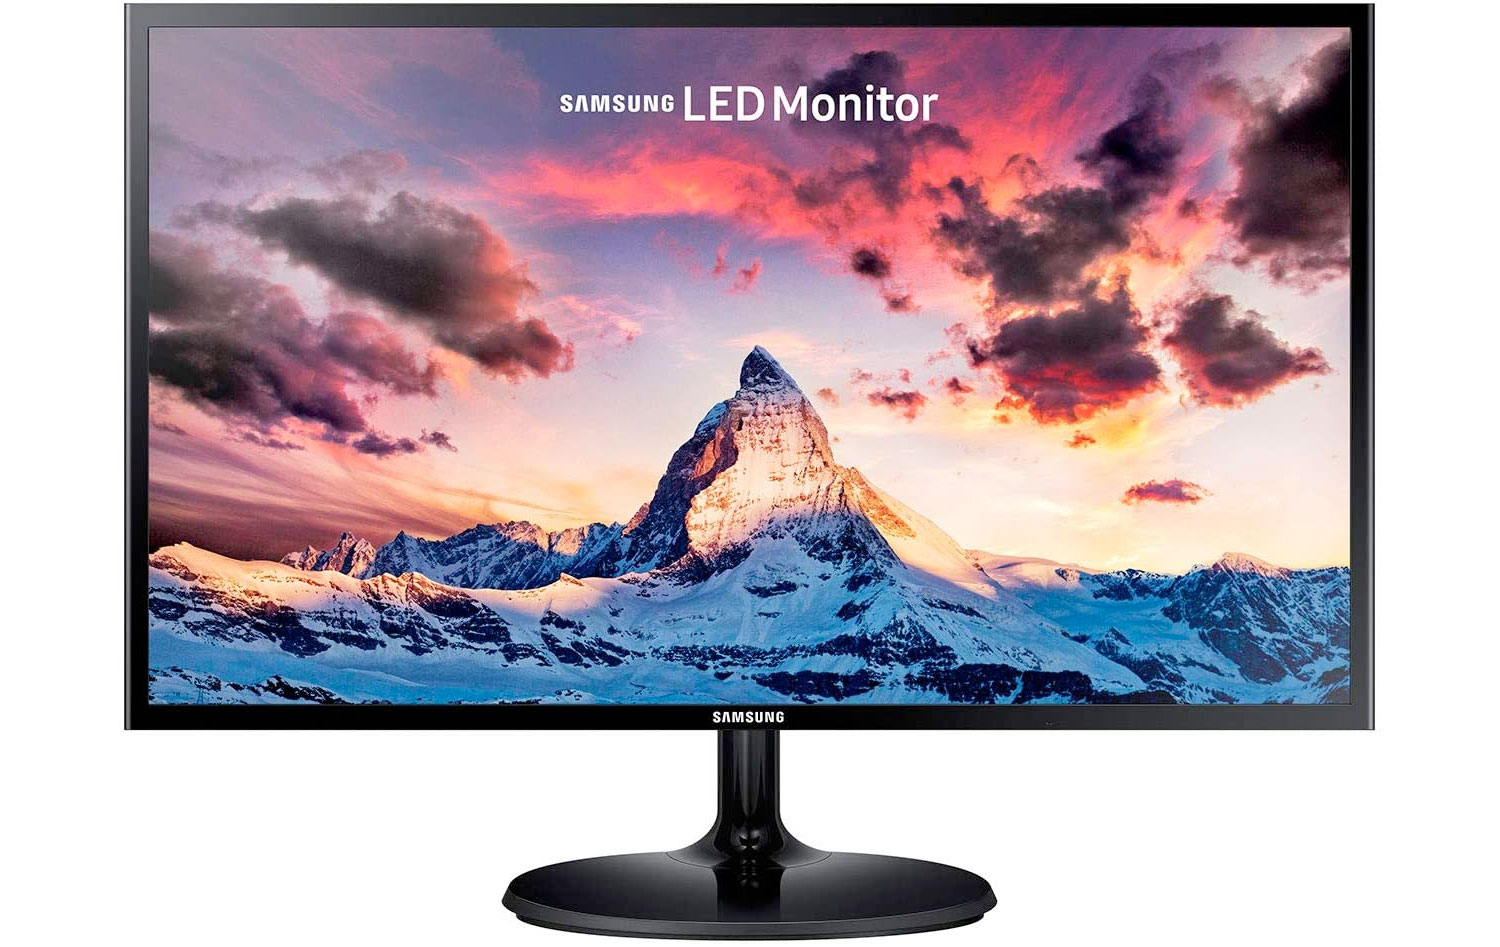 Amazon：Samsung LED 27吋全高清(Full HD)電腦顯示屏 (monitor)只賣$147.99